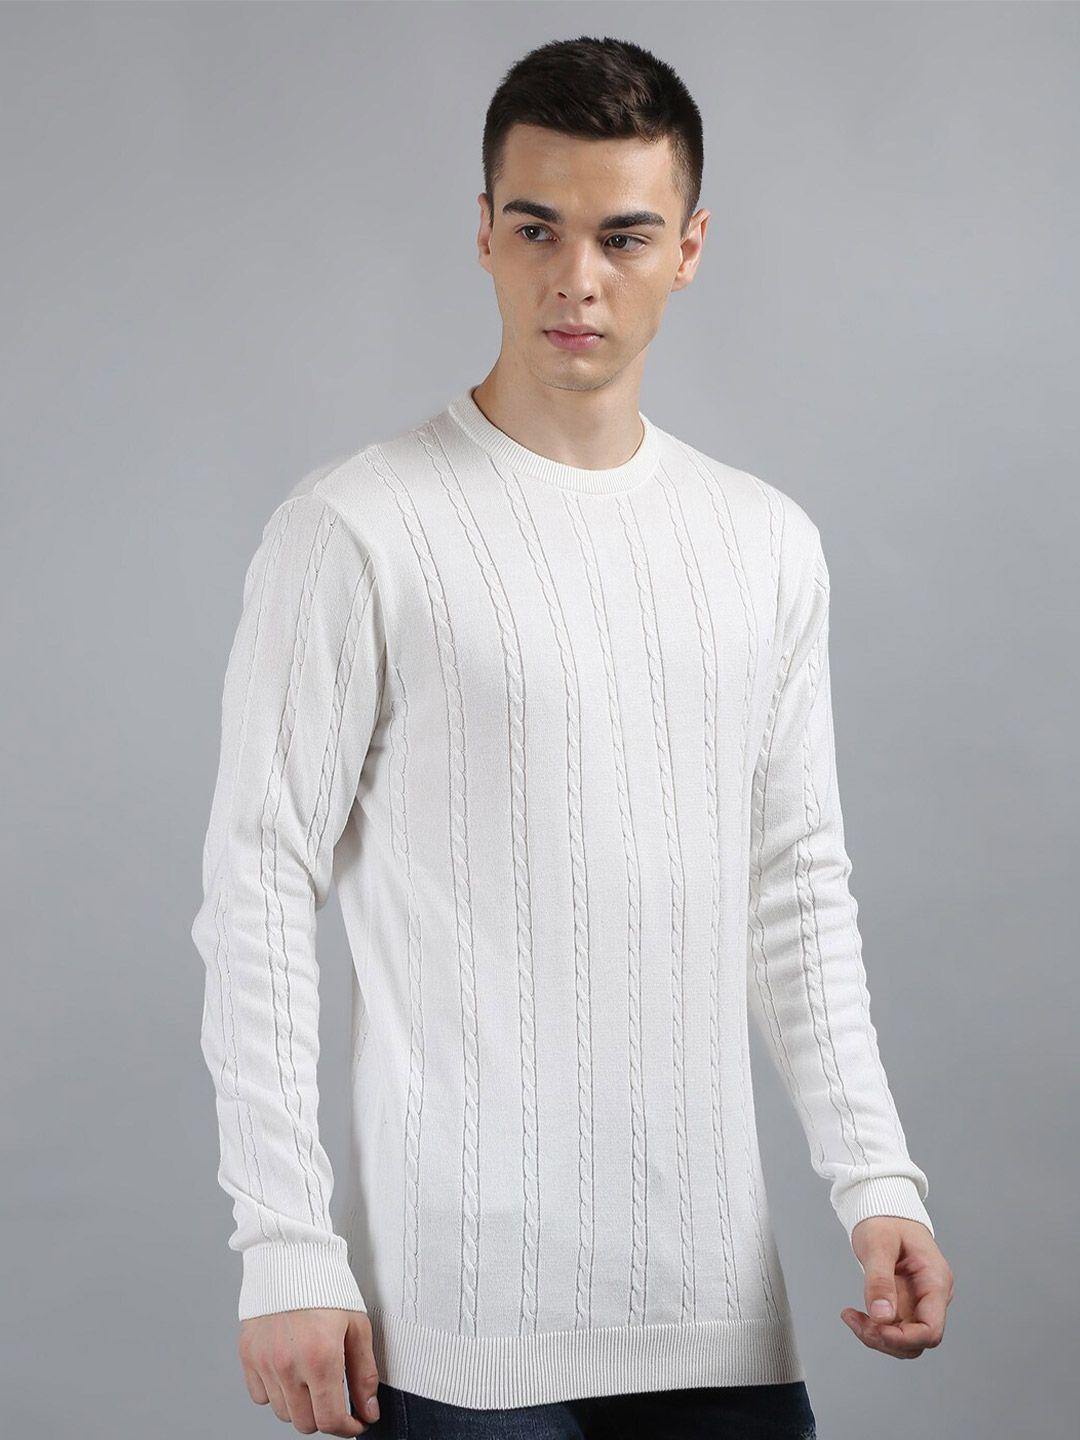 tim paris cable knit cotton pullover sweater